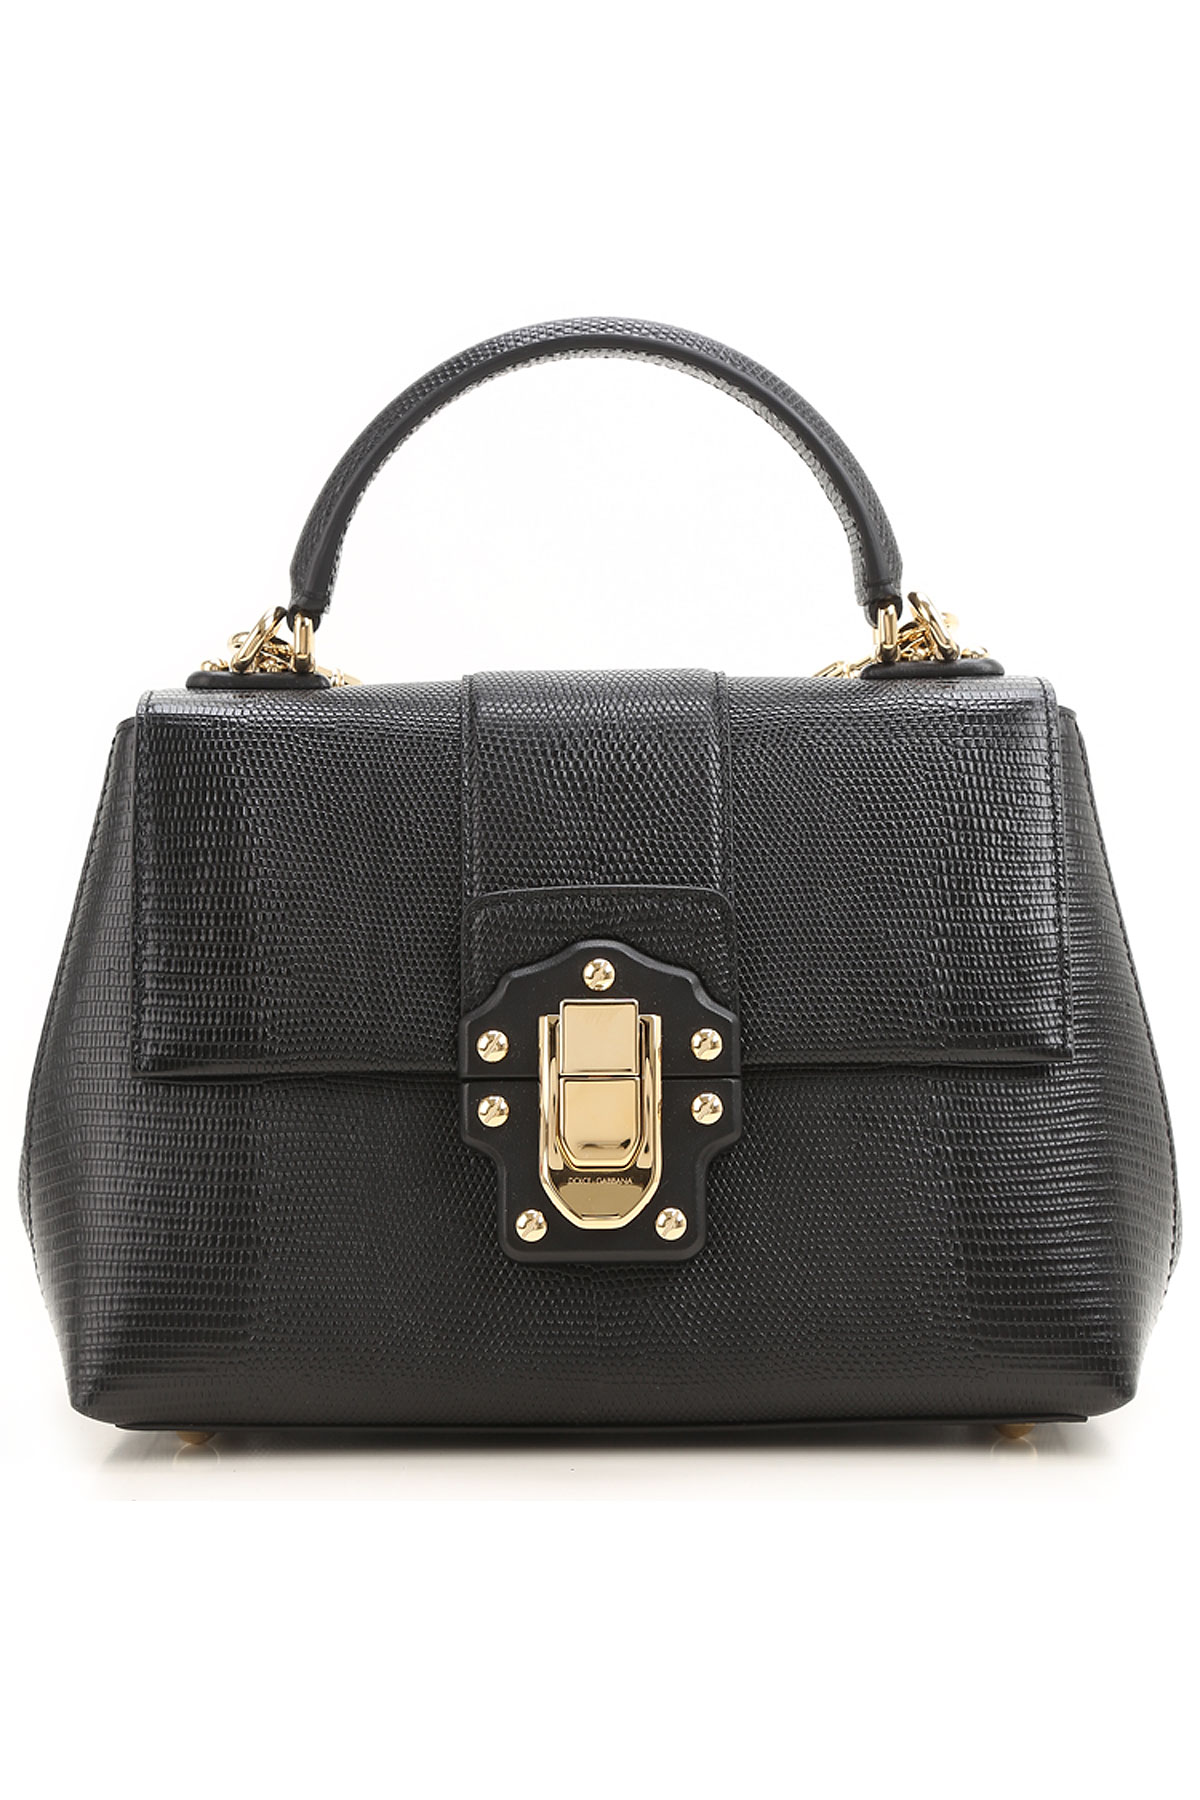 Handbags Dolce & Gabbana, Style code: bb6312-a1095-80999